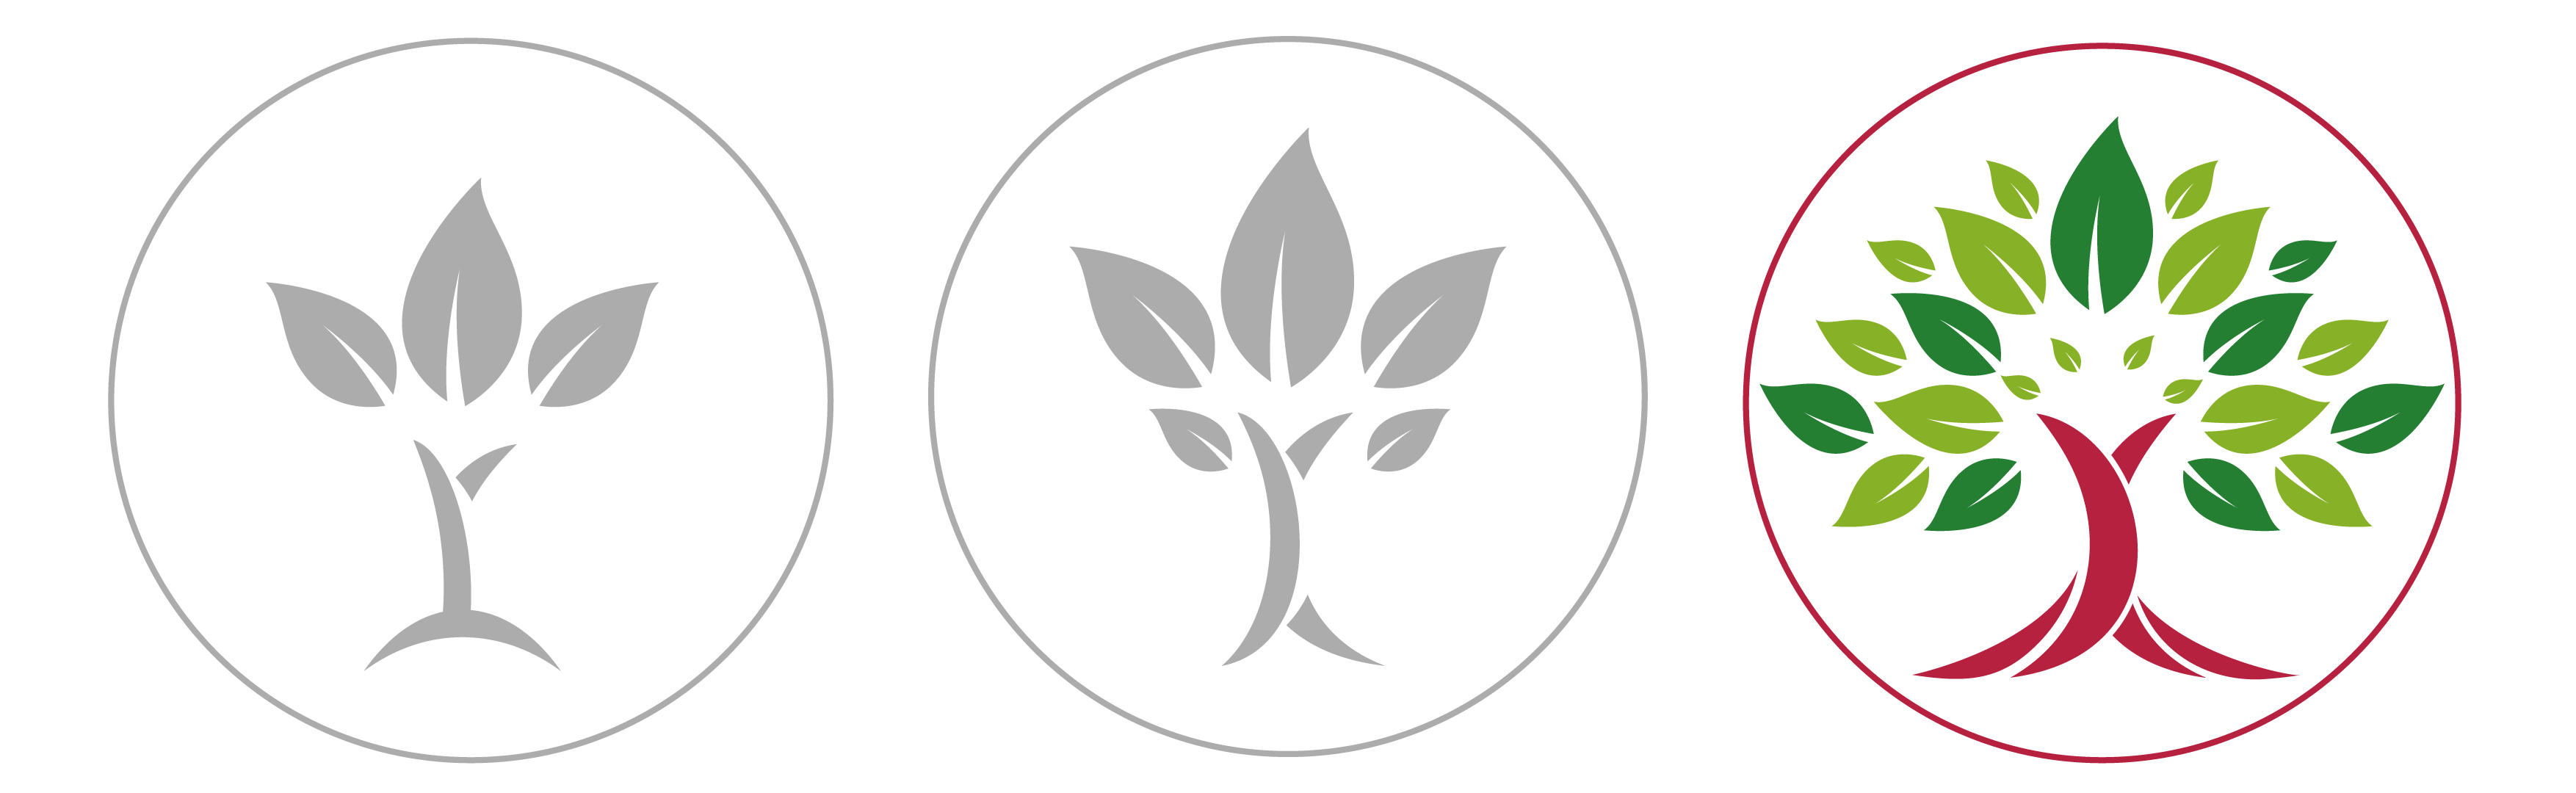 logos/award icons grey - trees-01